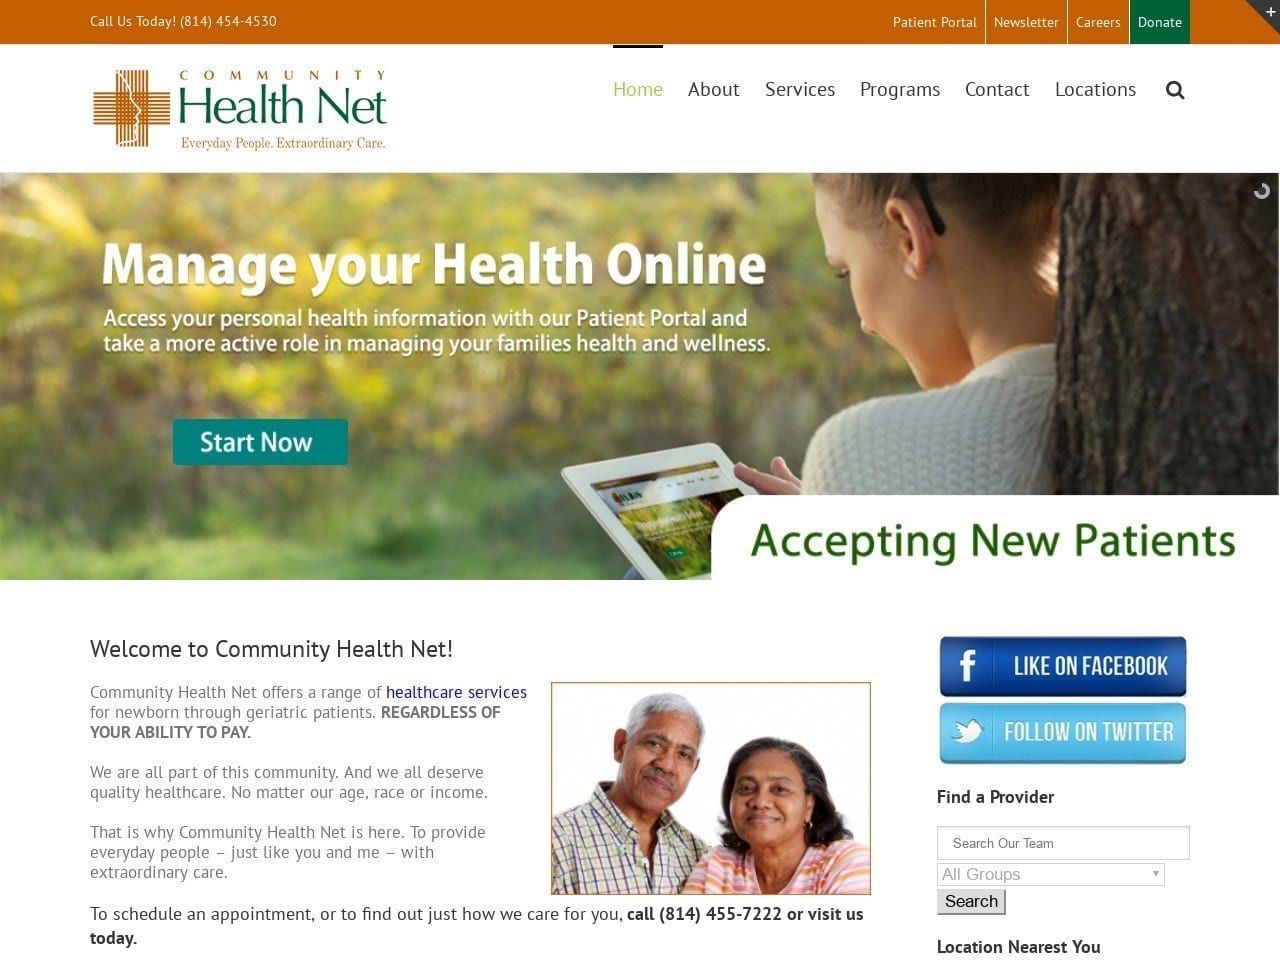 Community Health Net Dental Website Screenshot from community-healthnet.com